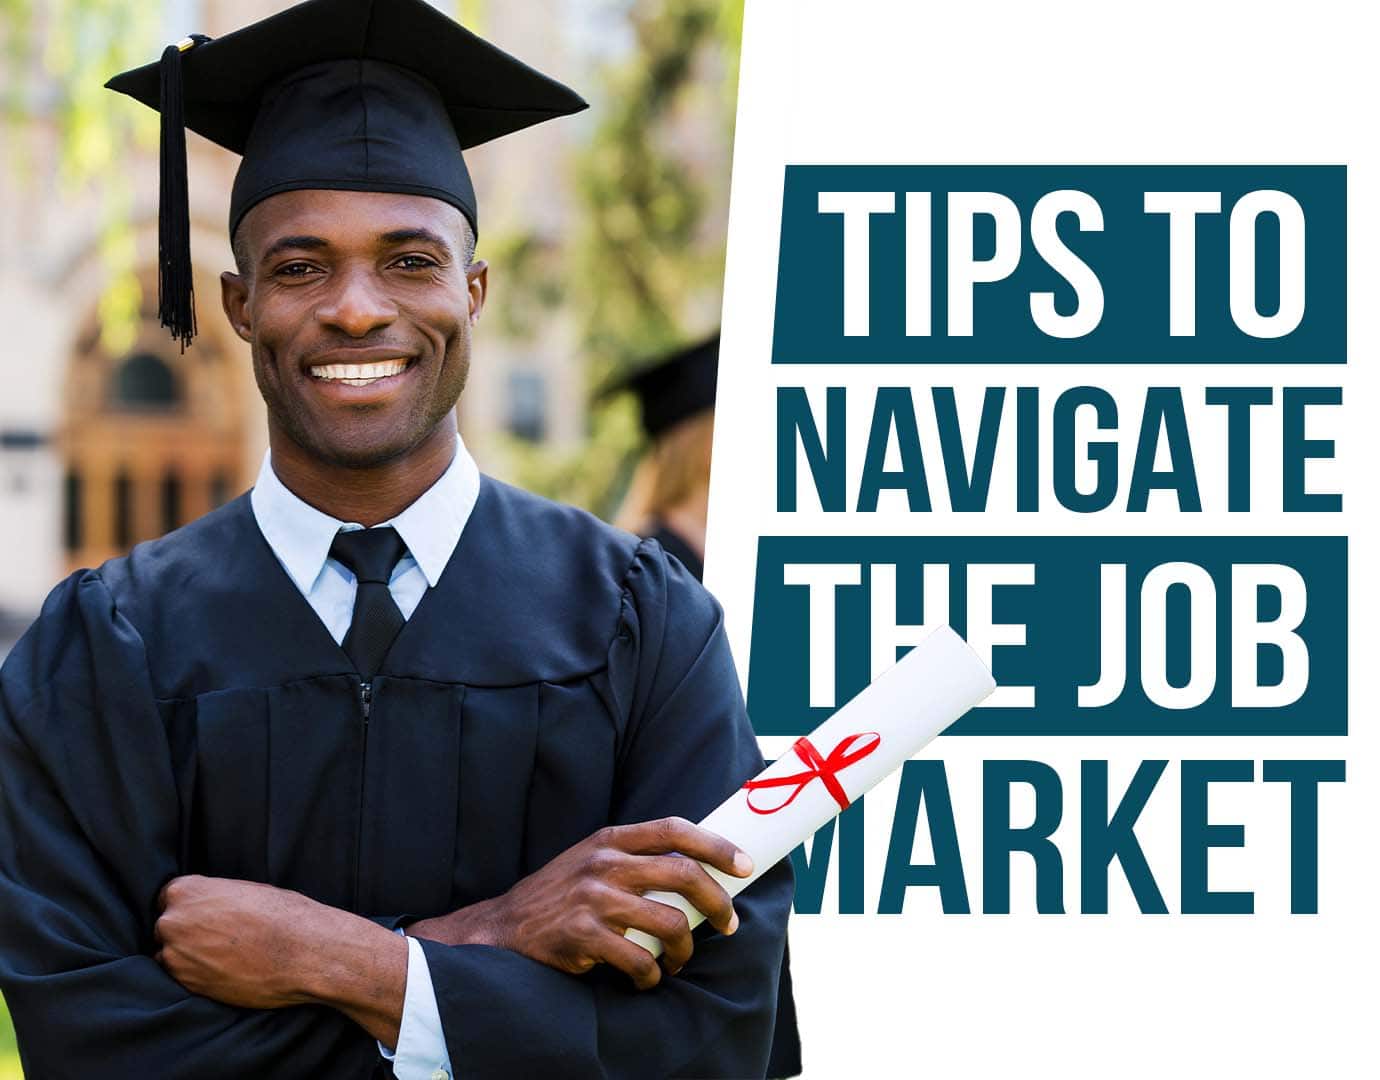 Tips to navigate the job market recent college graduates